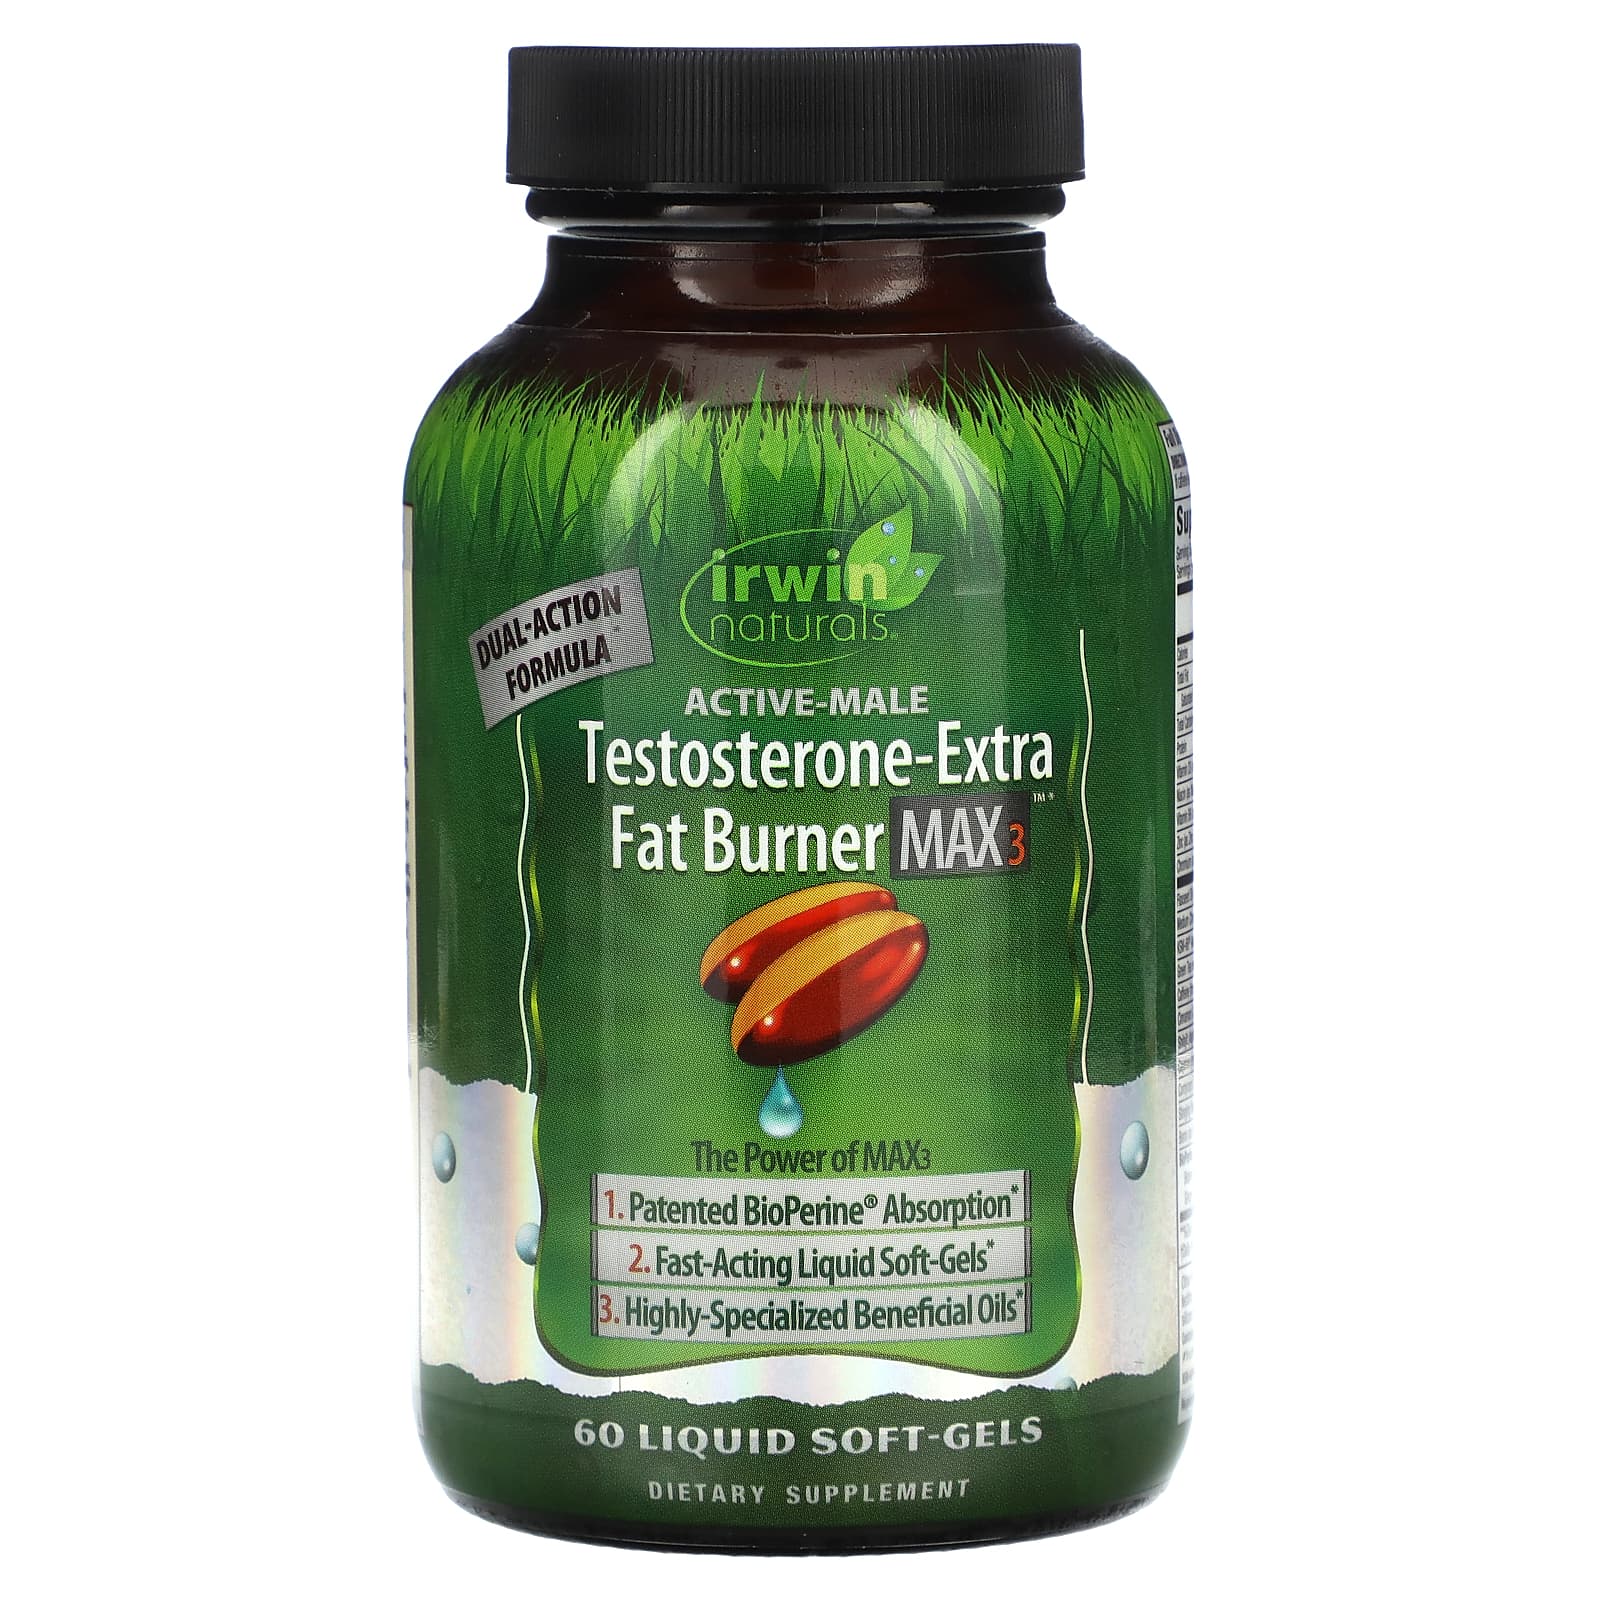 Irwin Naturals Active-Male Testosterone-Extra Fat Burner MAX 3 60 мягких таблеток irwin naturals testosterone up prostate defense двойного действия 60 мягких таблеток